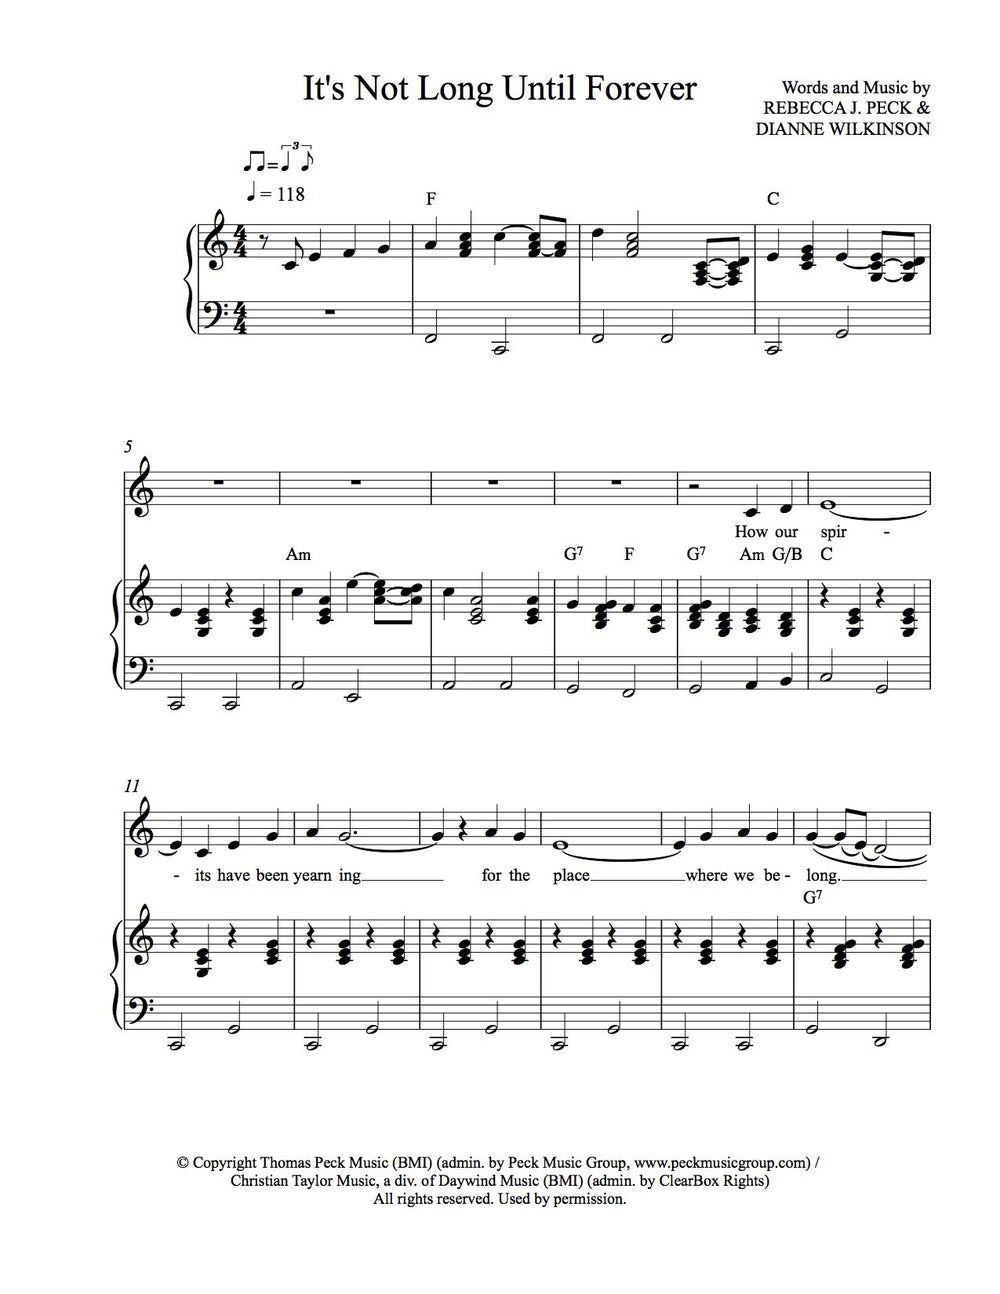 It's Not Long Until Forever - sheet music - Digitally Delivered PDF